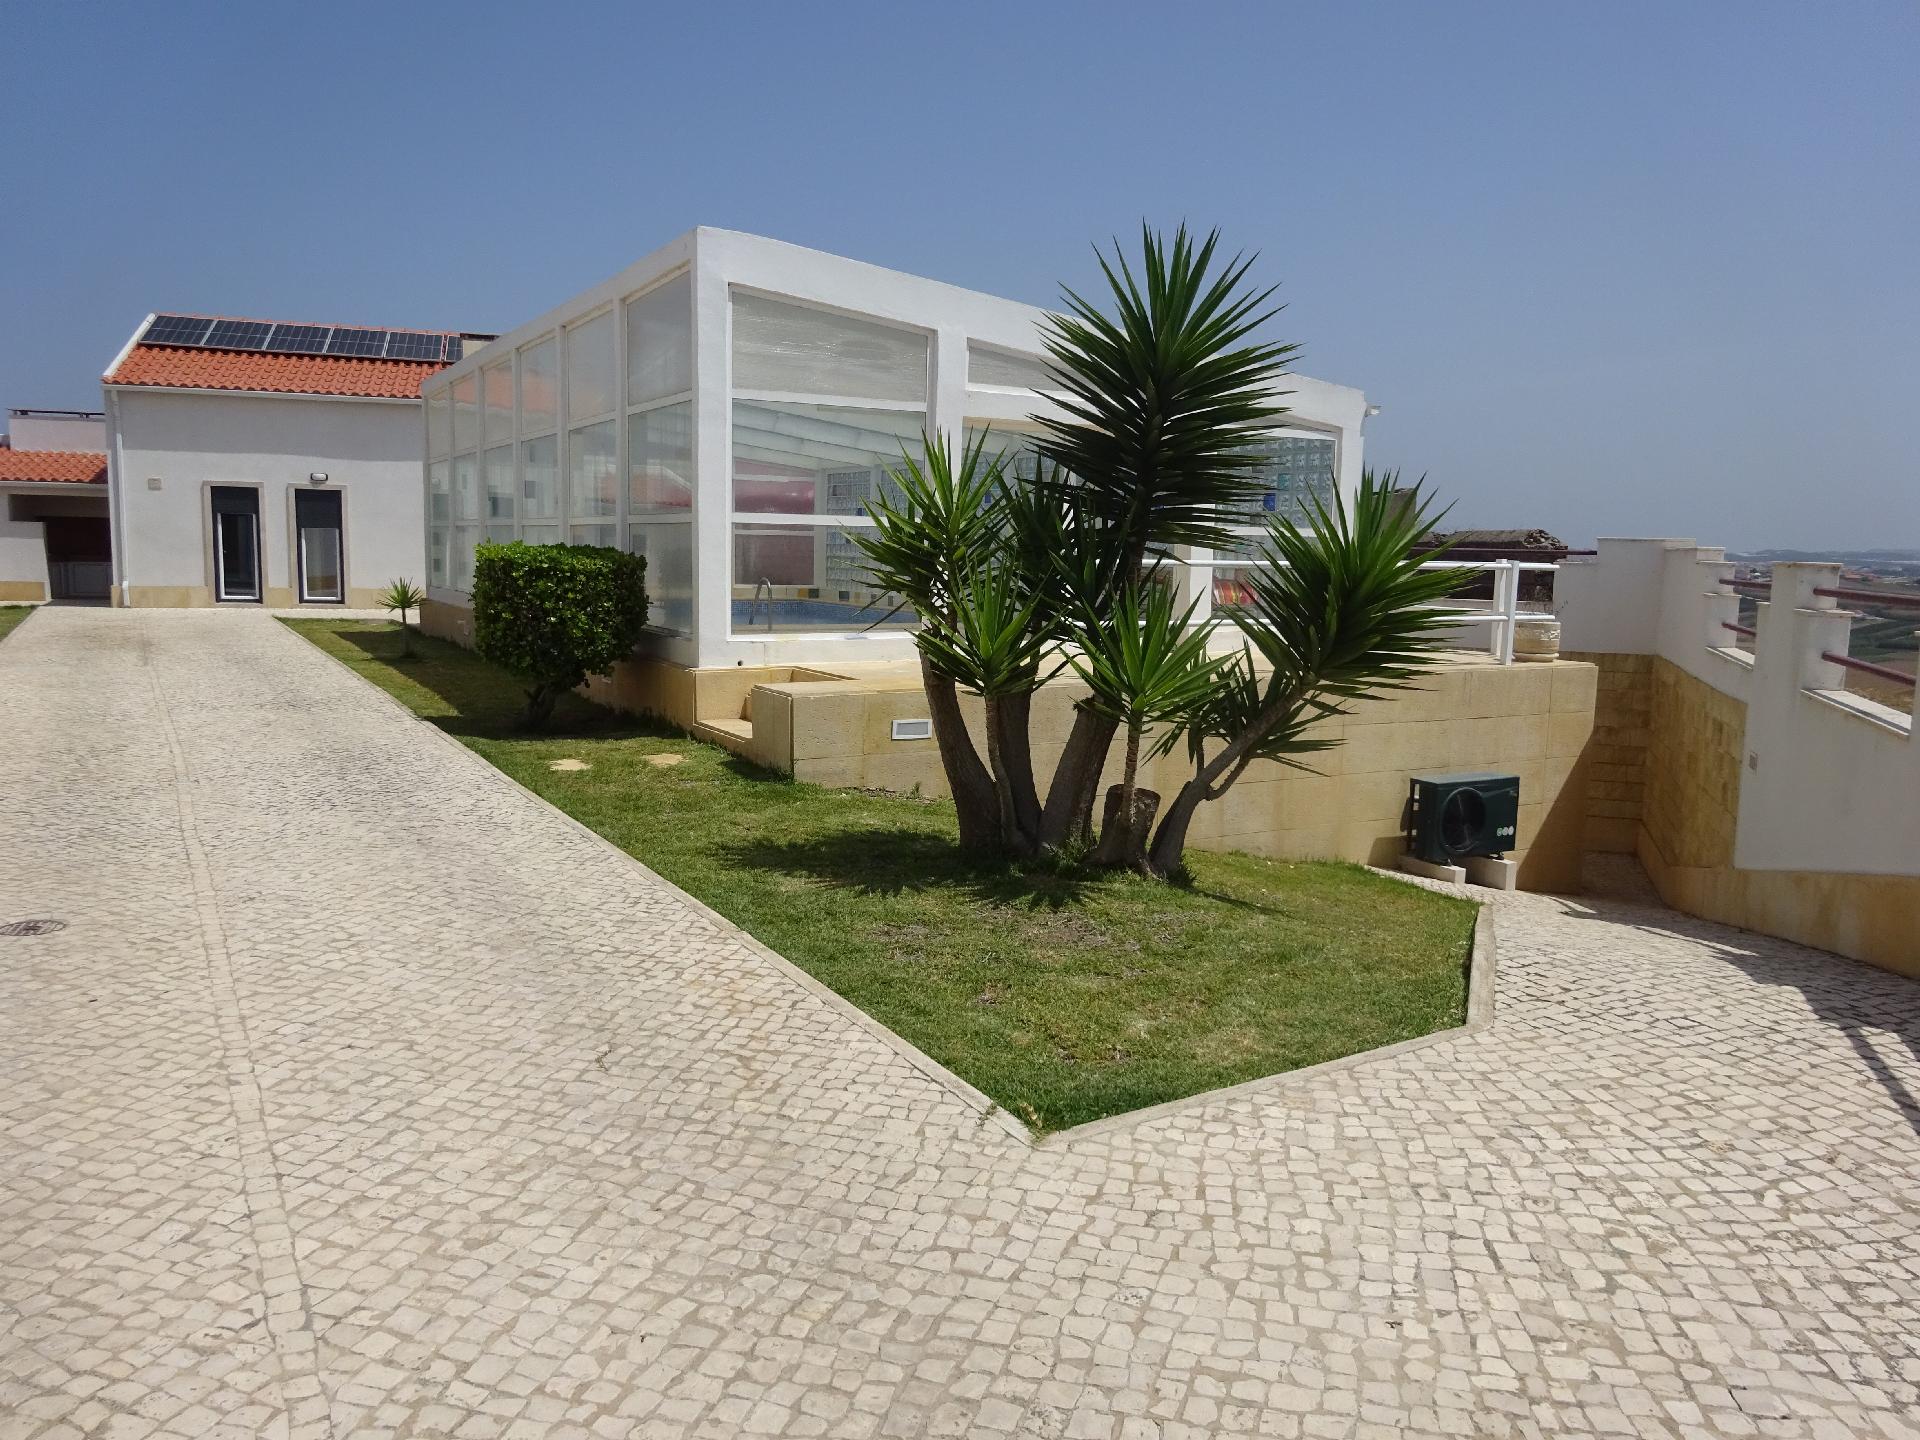 Ferienhaus in São Pedro Da Cadeira mit Priv  in Portugal